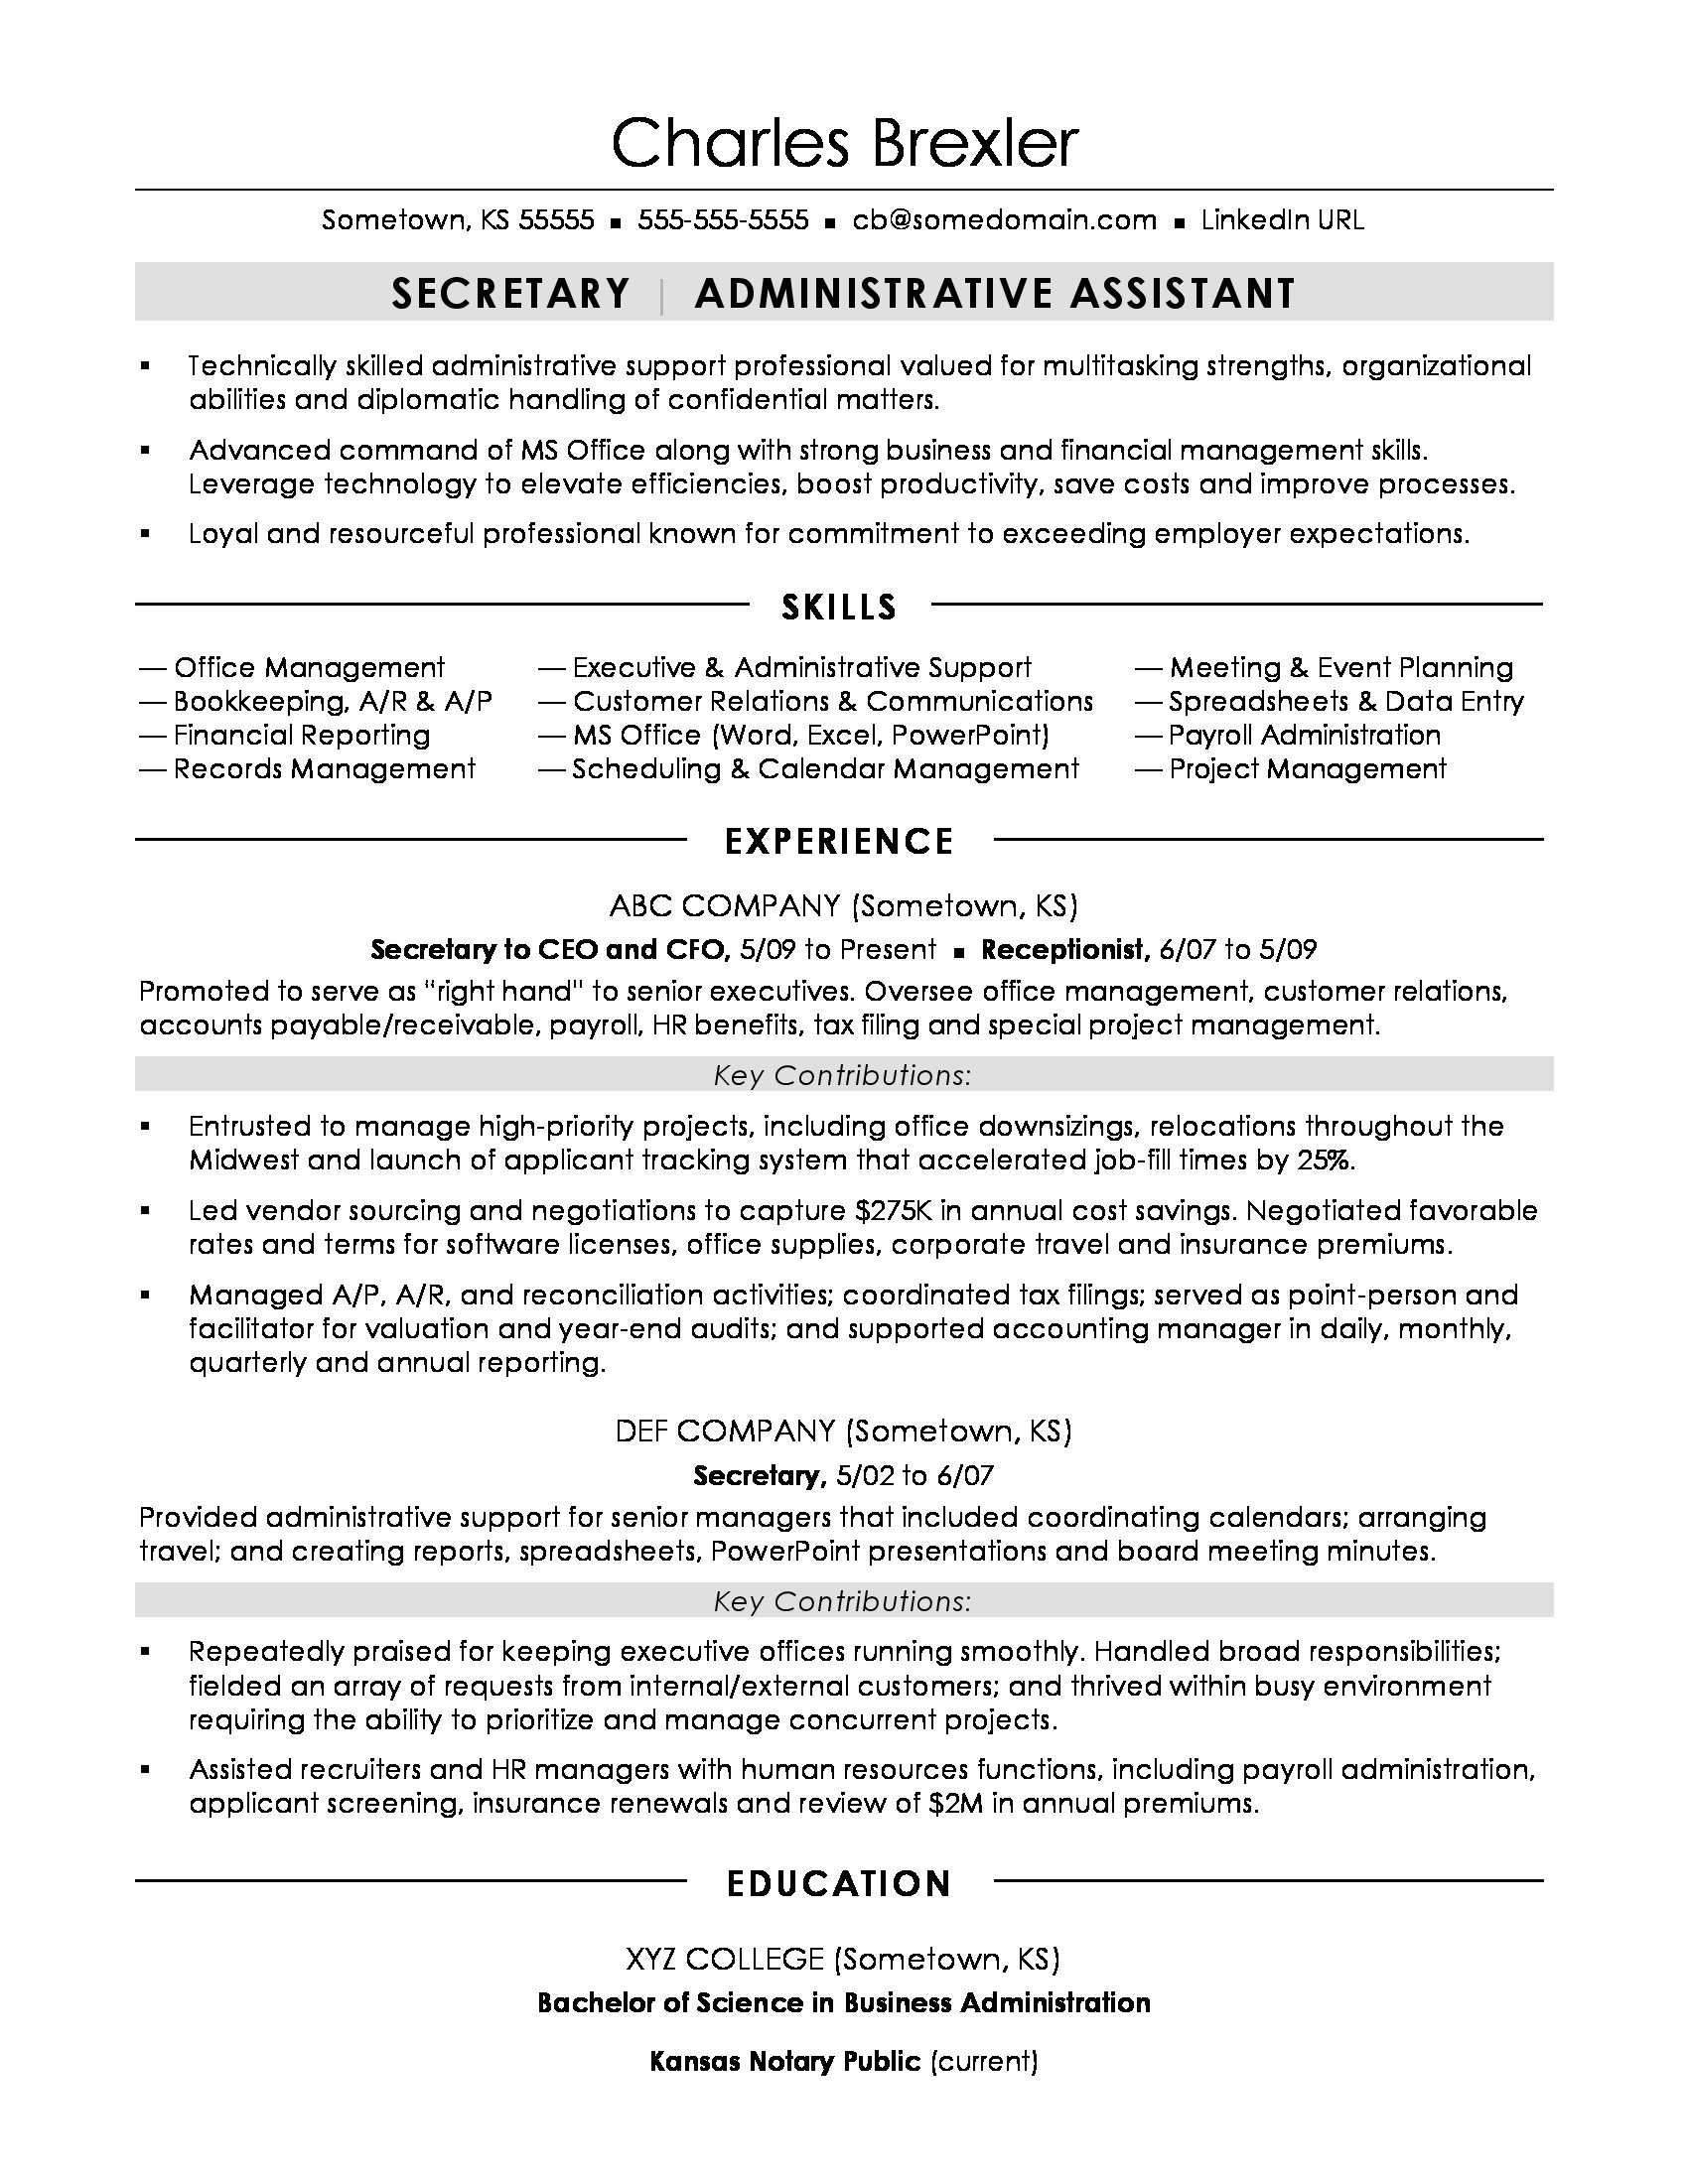 Sample Resume Images with Skills Listed Secretary Resume Sample Monster.com